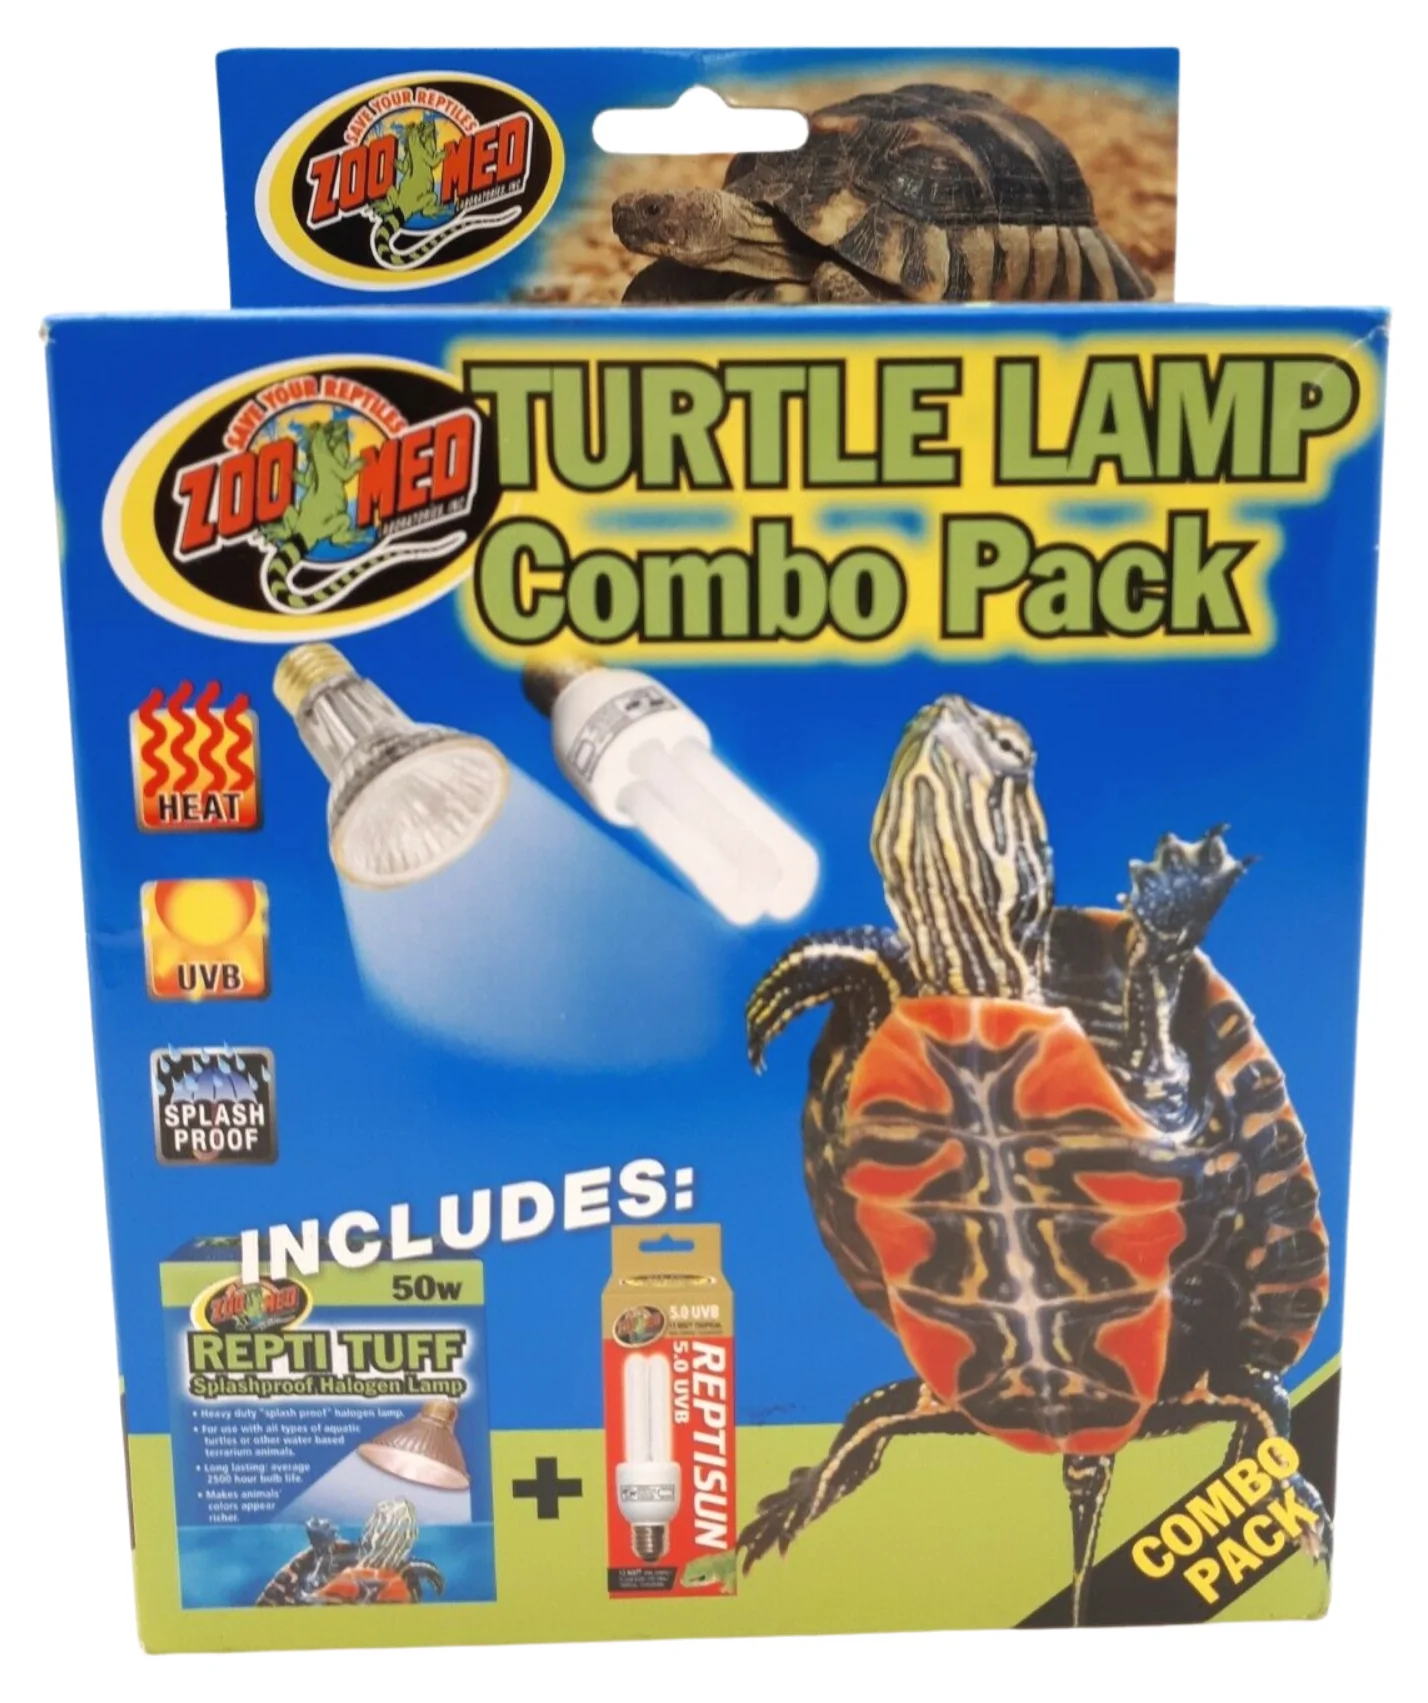 Zoo Med Turtle Lamp Combo Pack / Turtle Heat Lamp / Terrarium Supplies